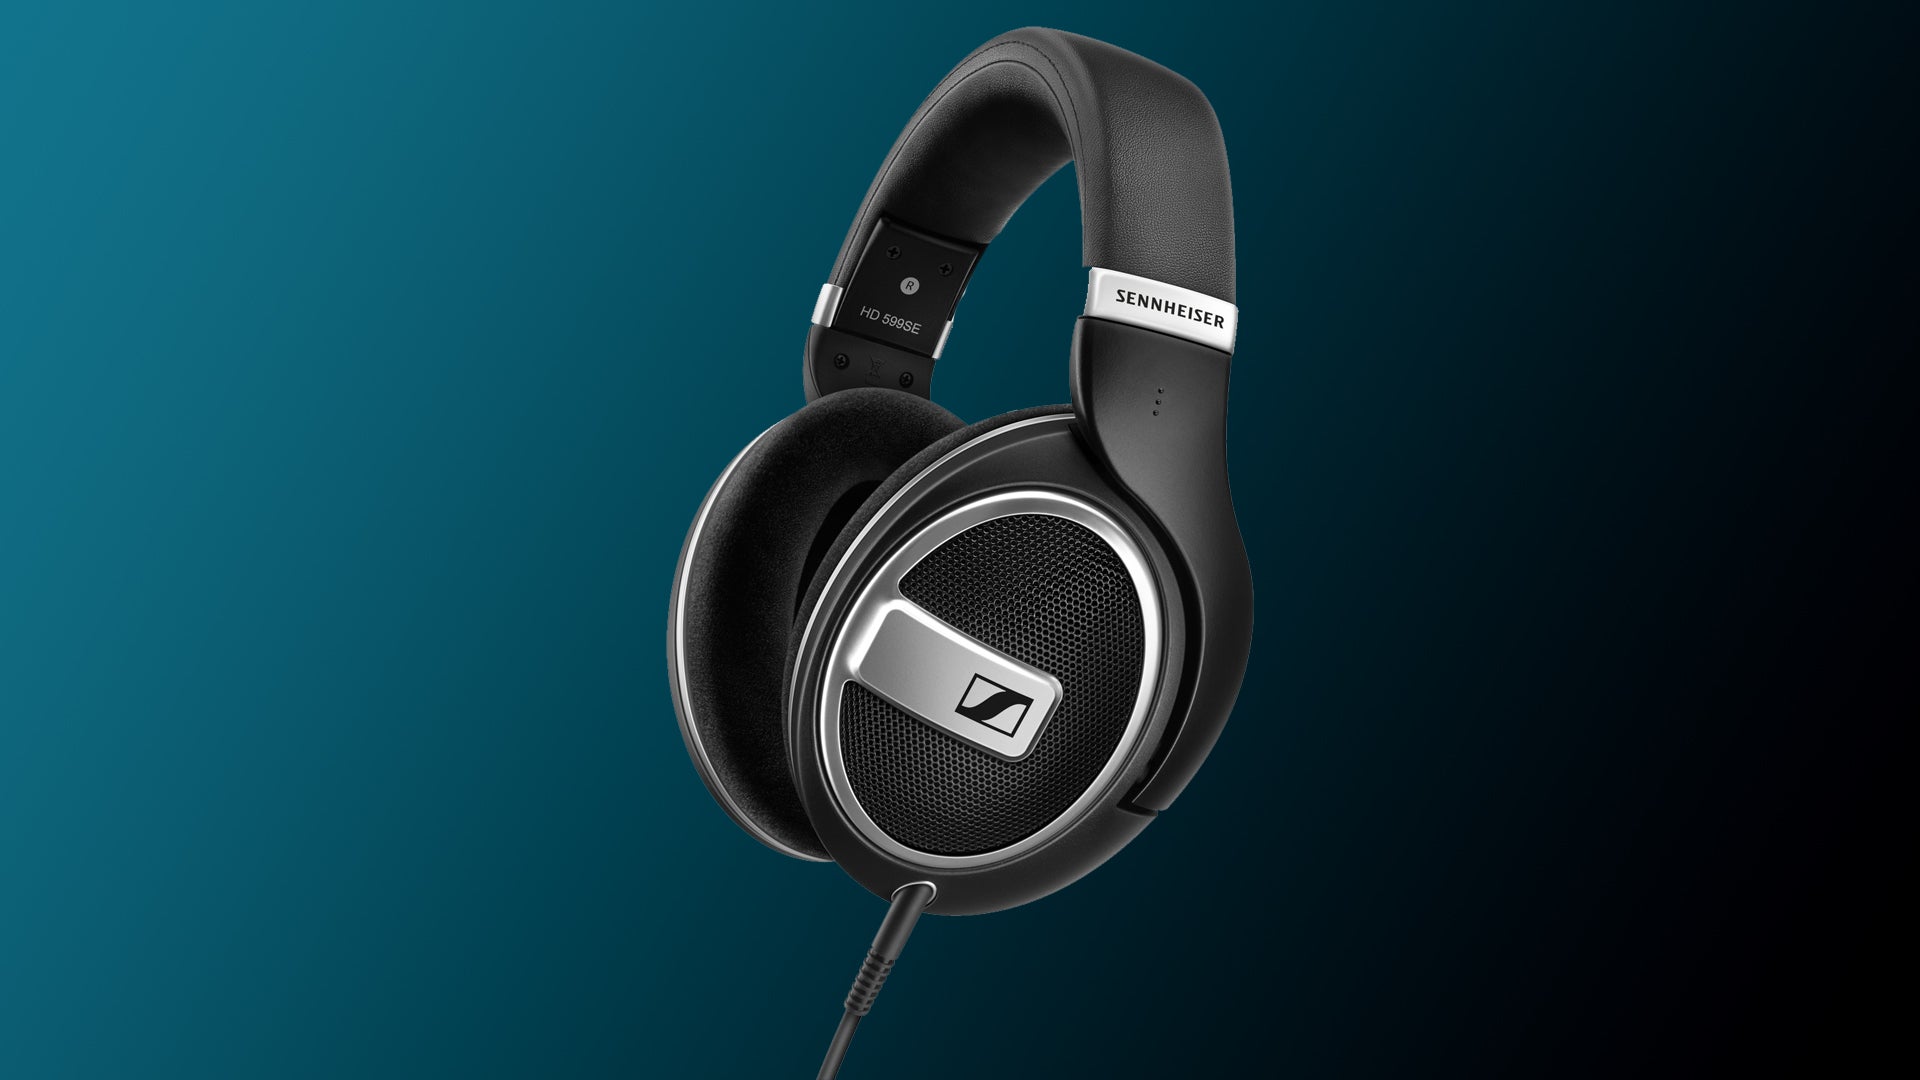 Sennheiser's legendary HD 599 open-back headphones are just £70 at